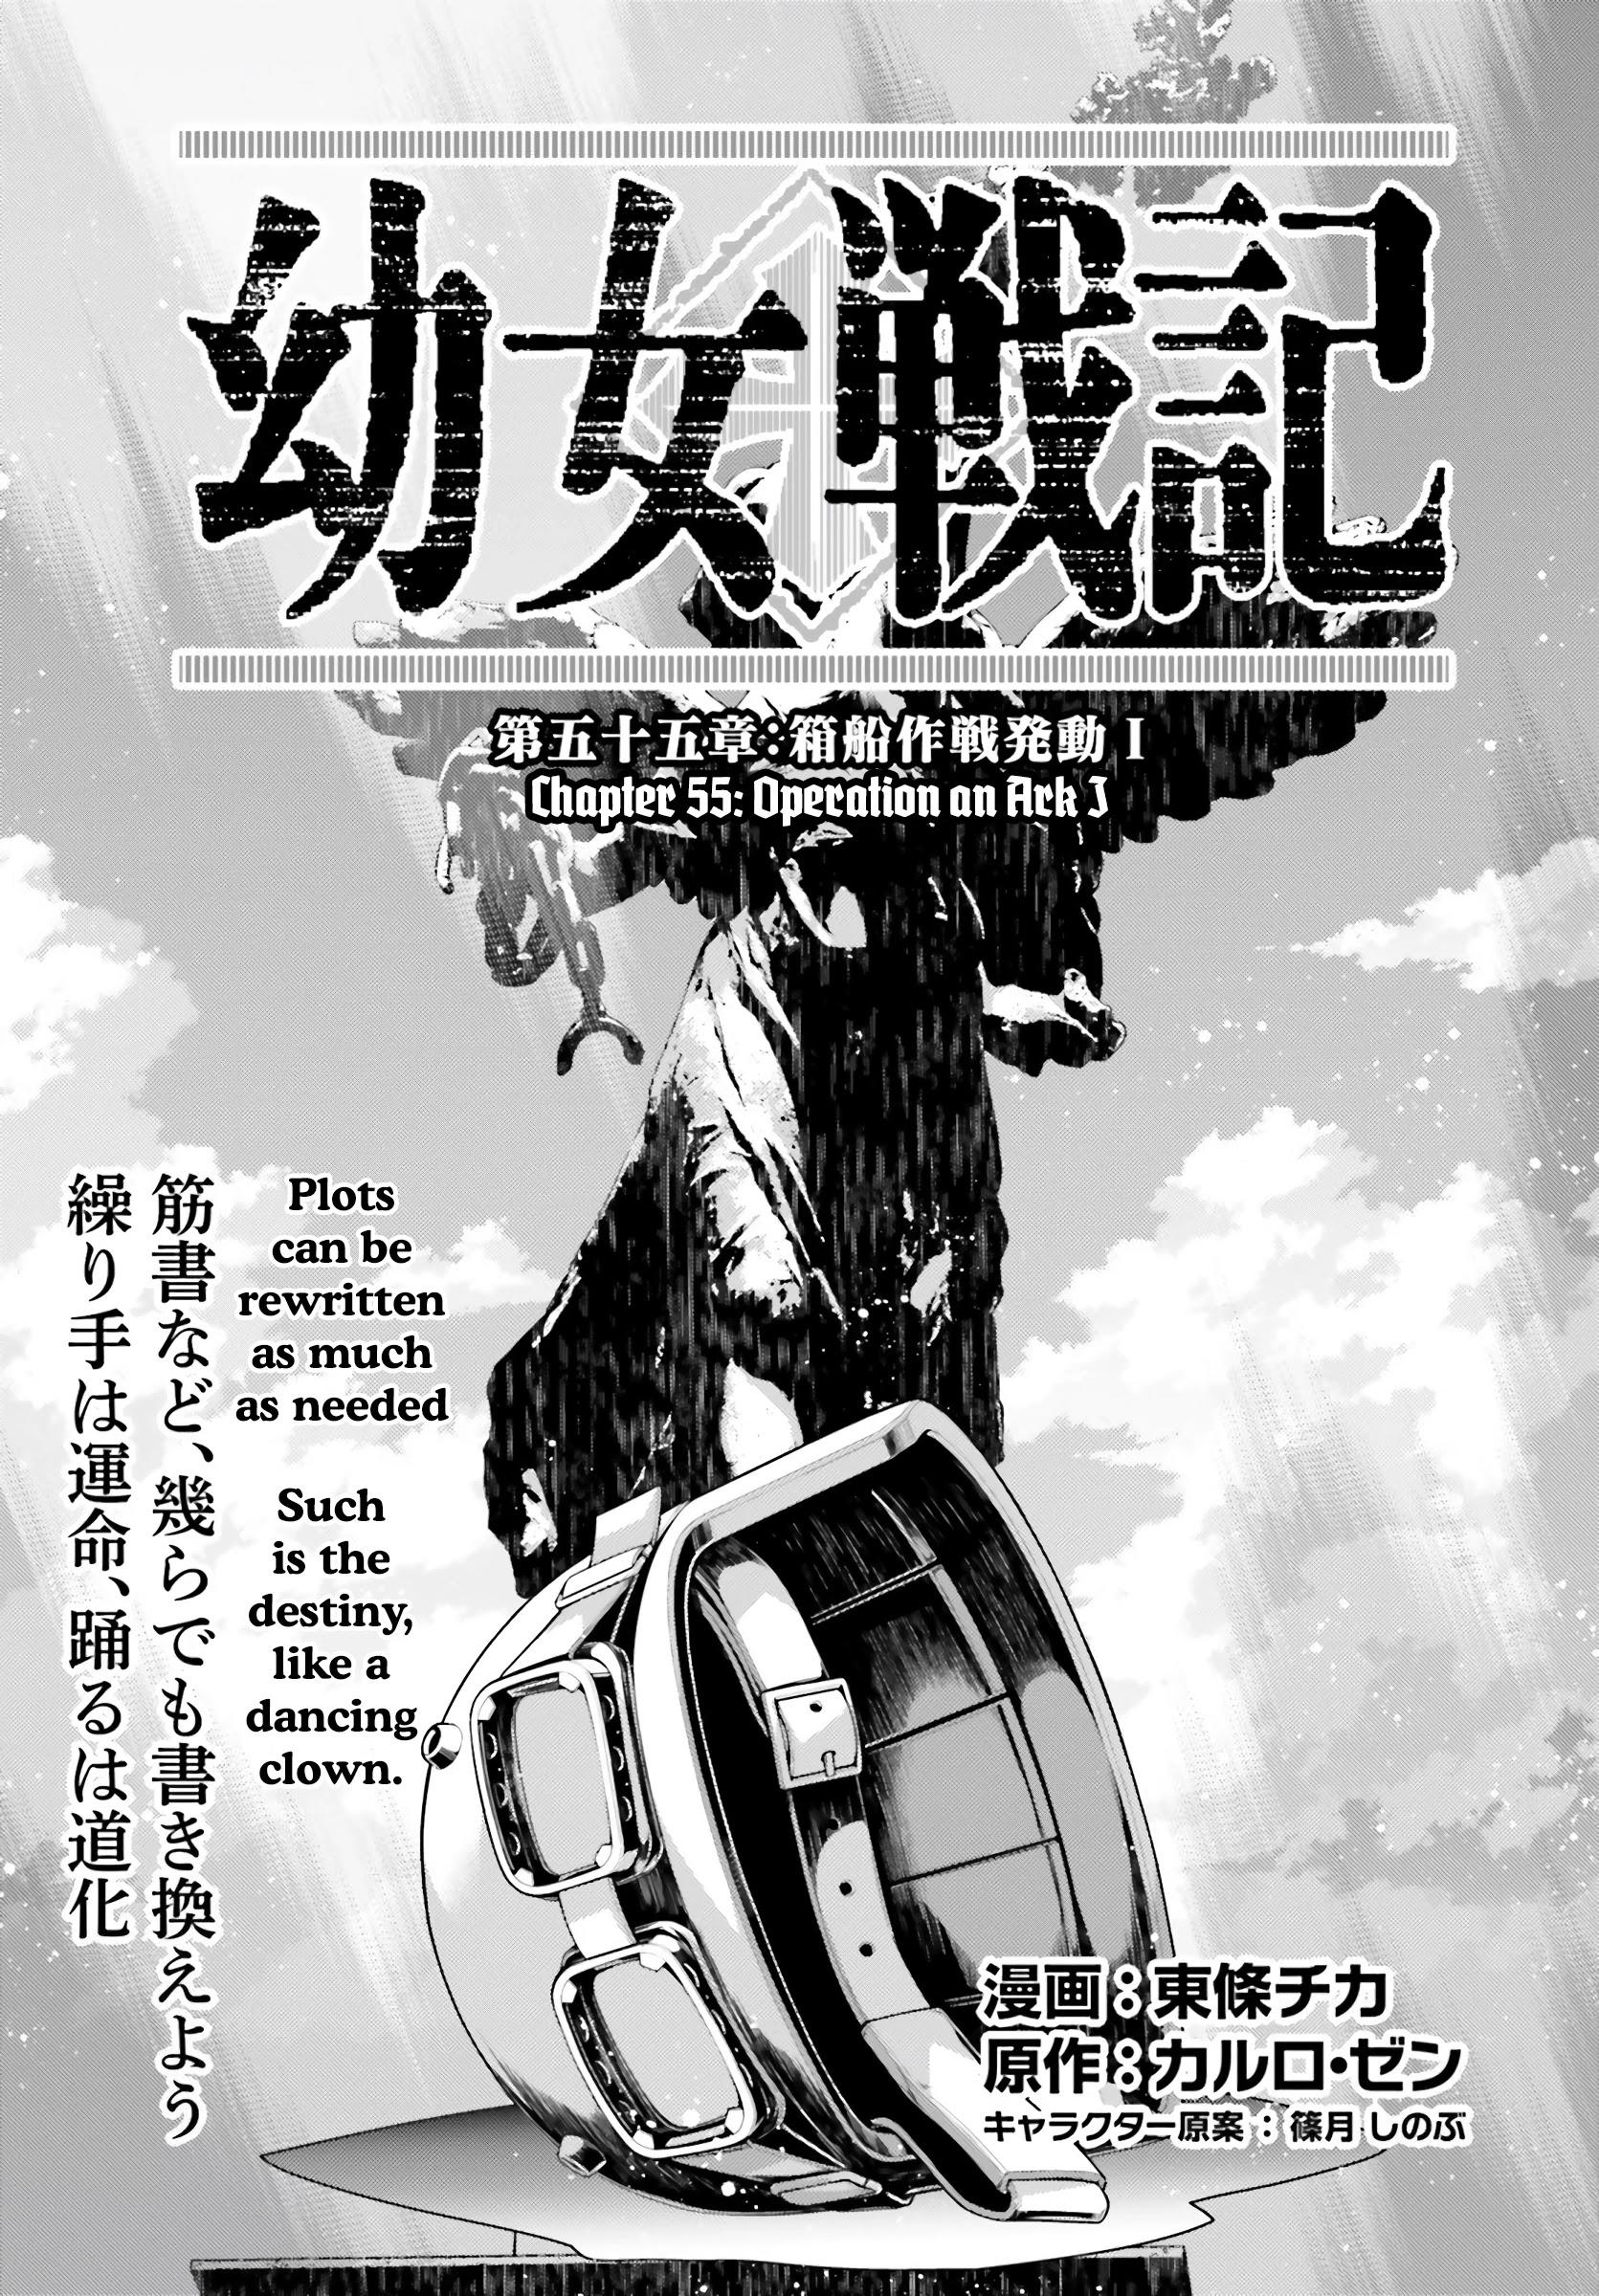 Read Youjo Senki Chapter 55 Operation An Ark I On Mangakakalot